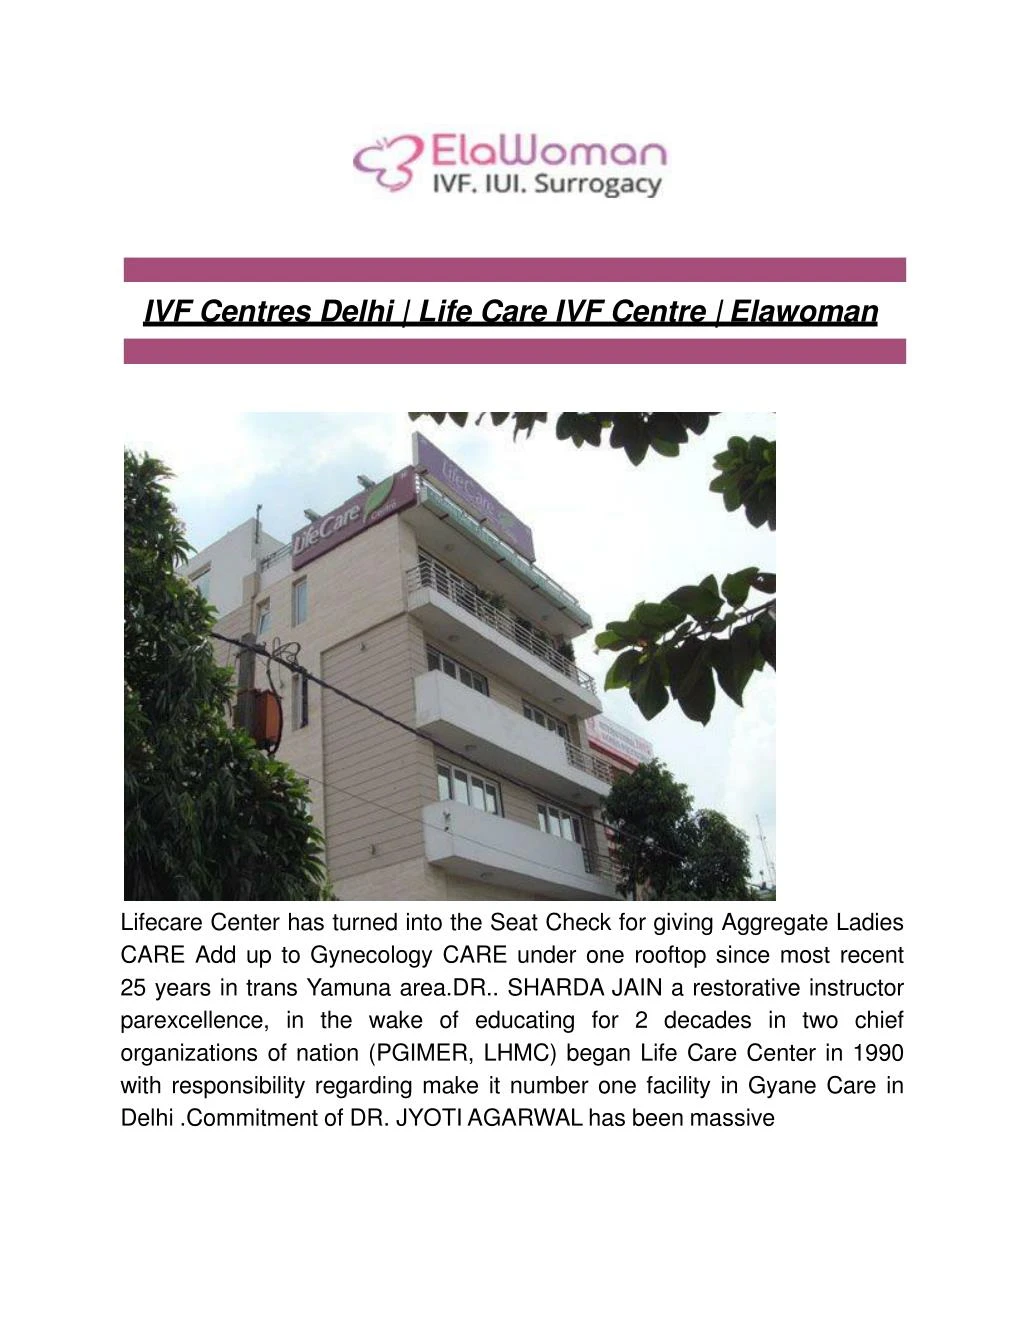 ivf centres delhi life care ivf centre elawoman